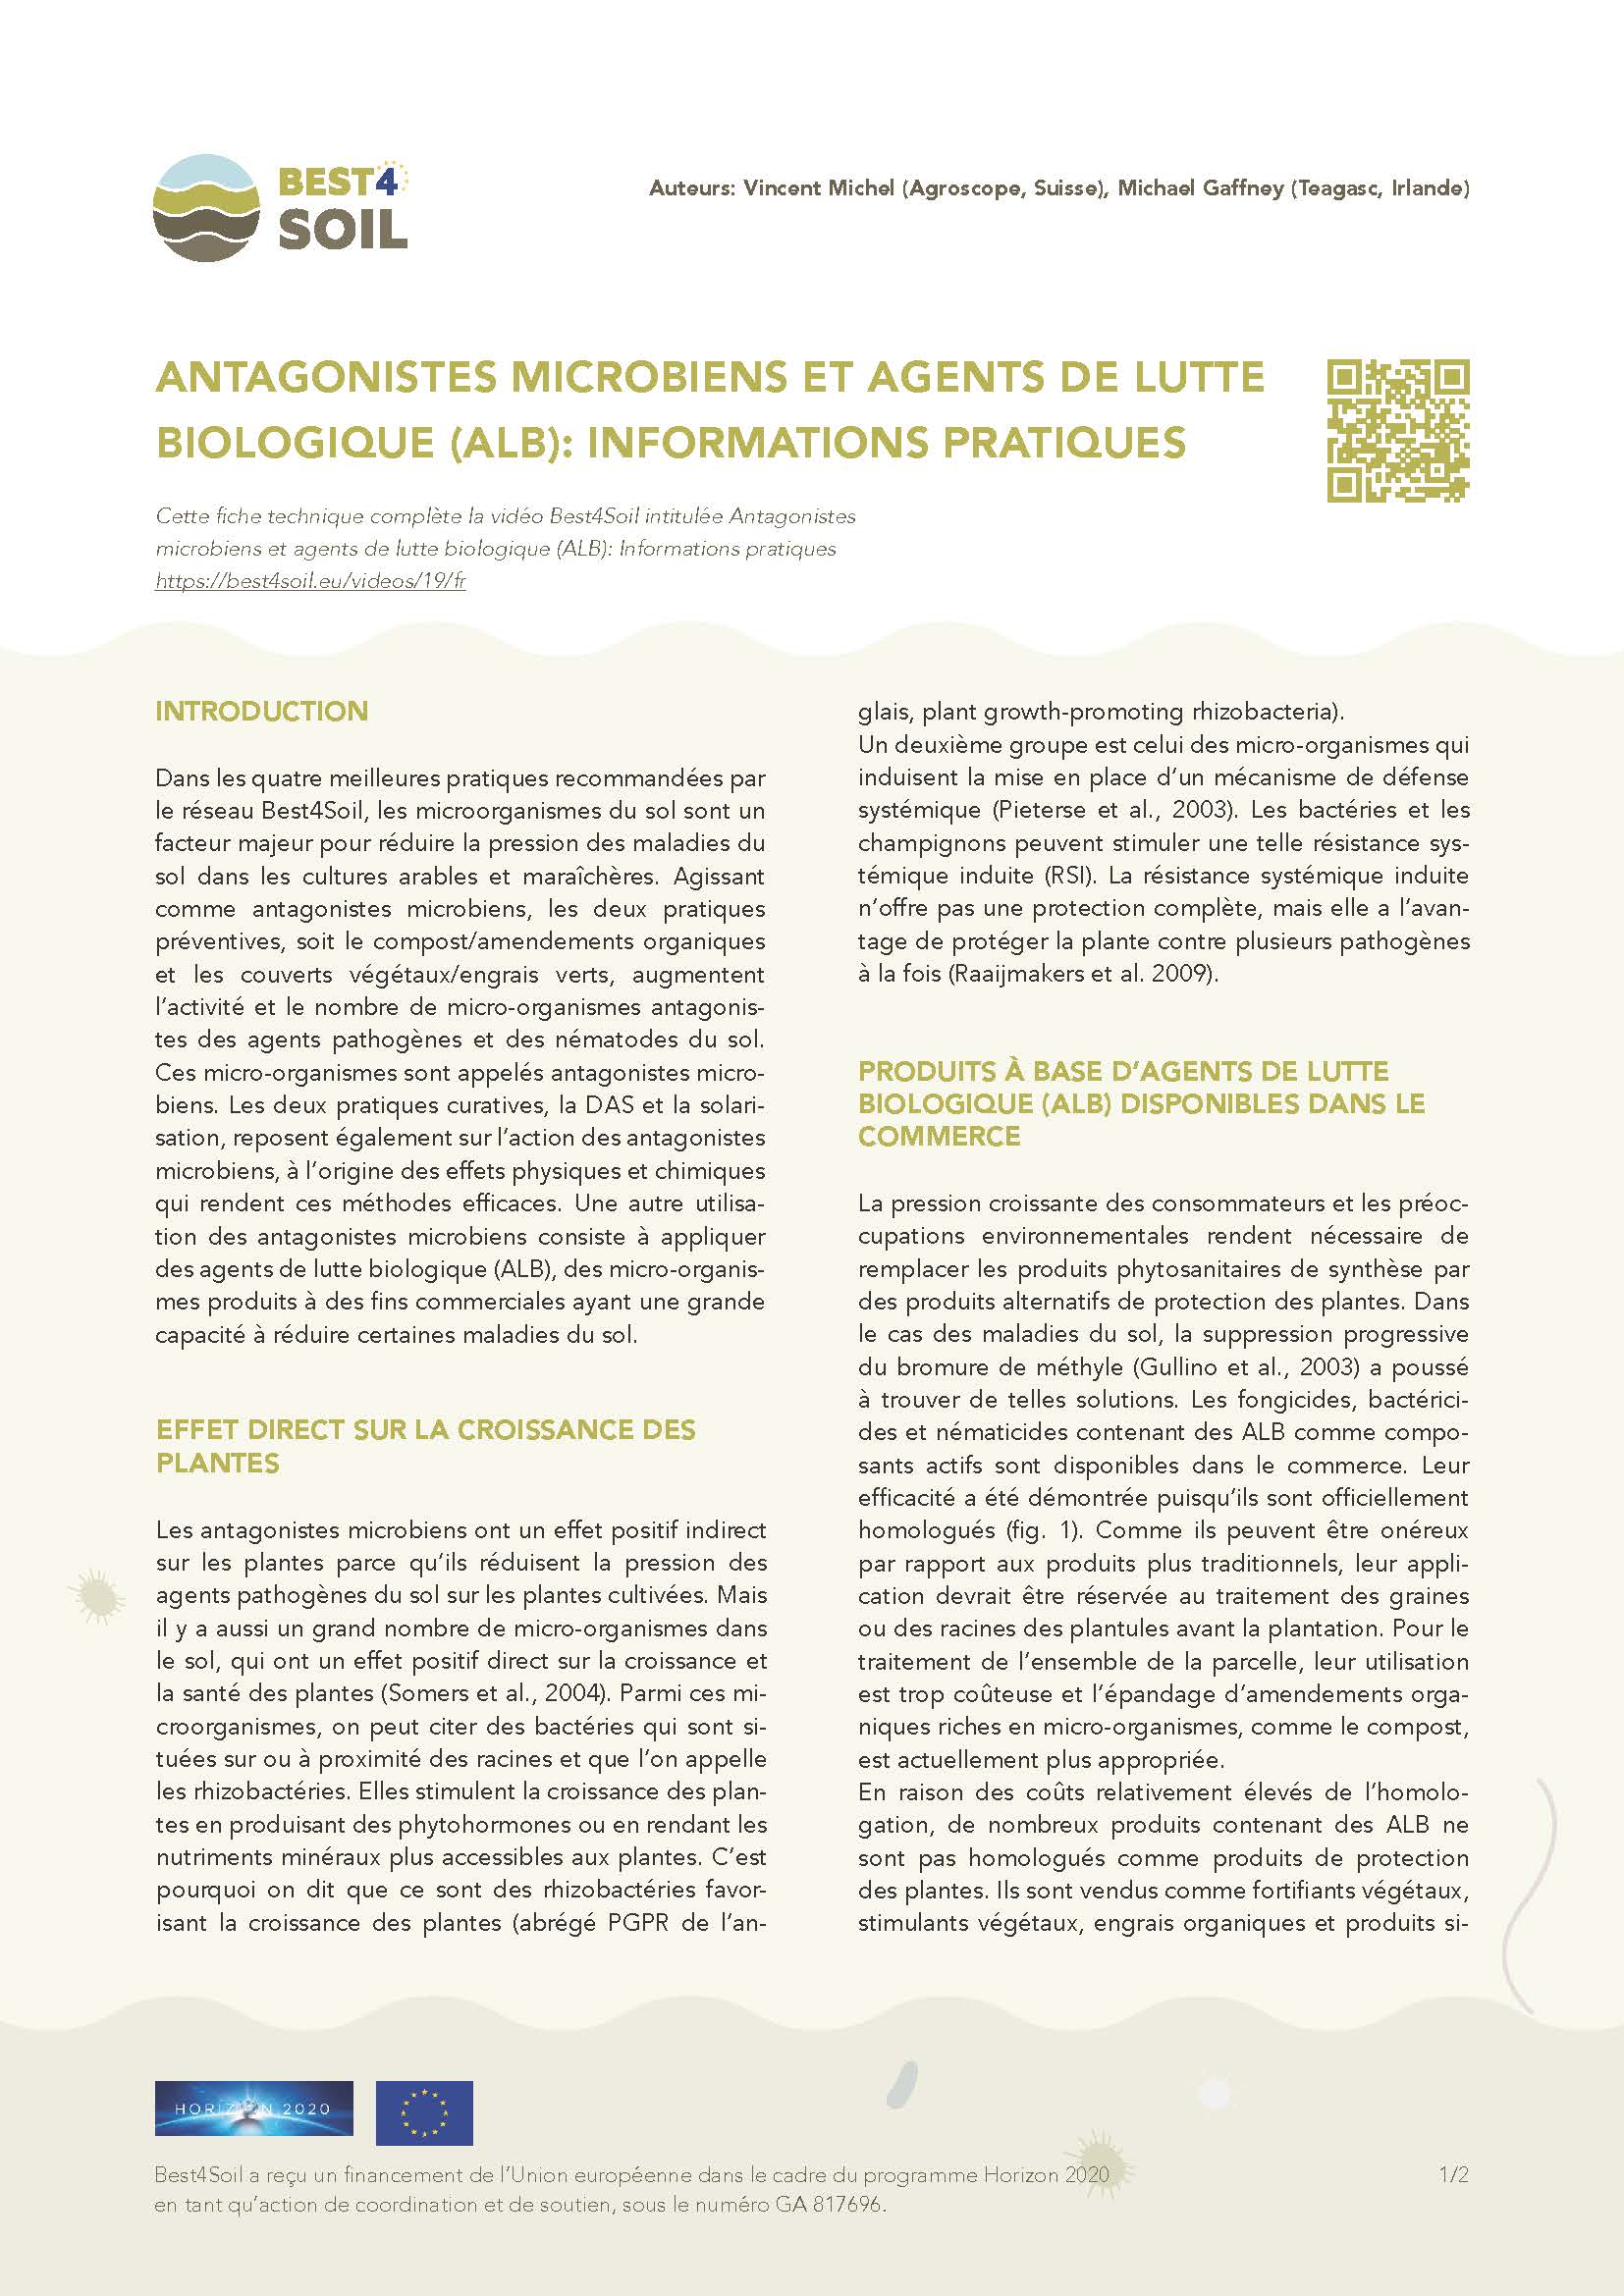 Microbial antagonists & bca: Practical information (Best4Soil Factsheet)